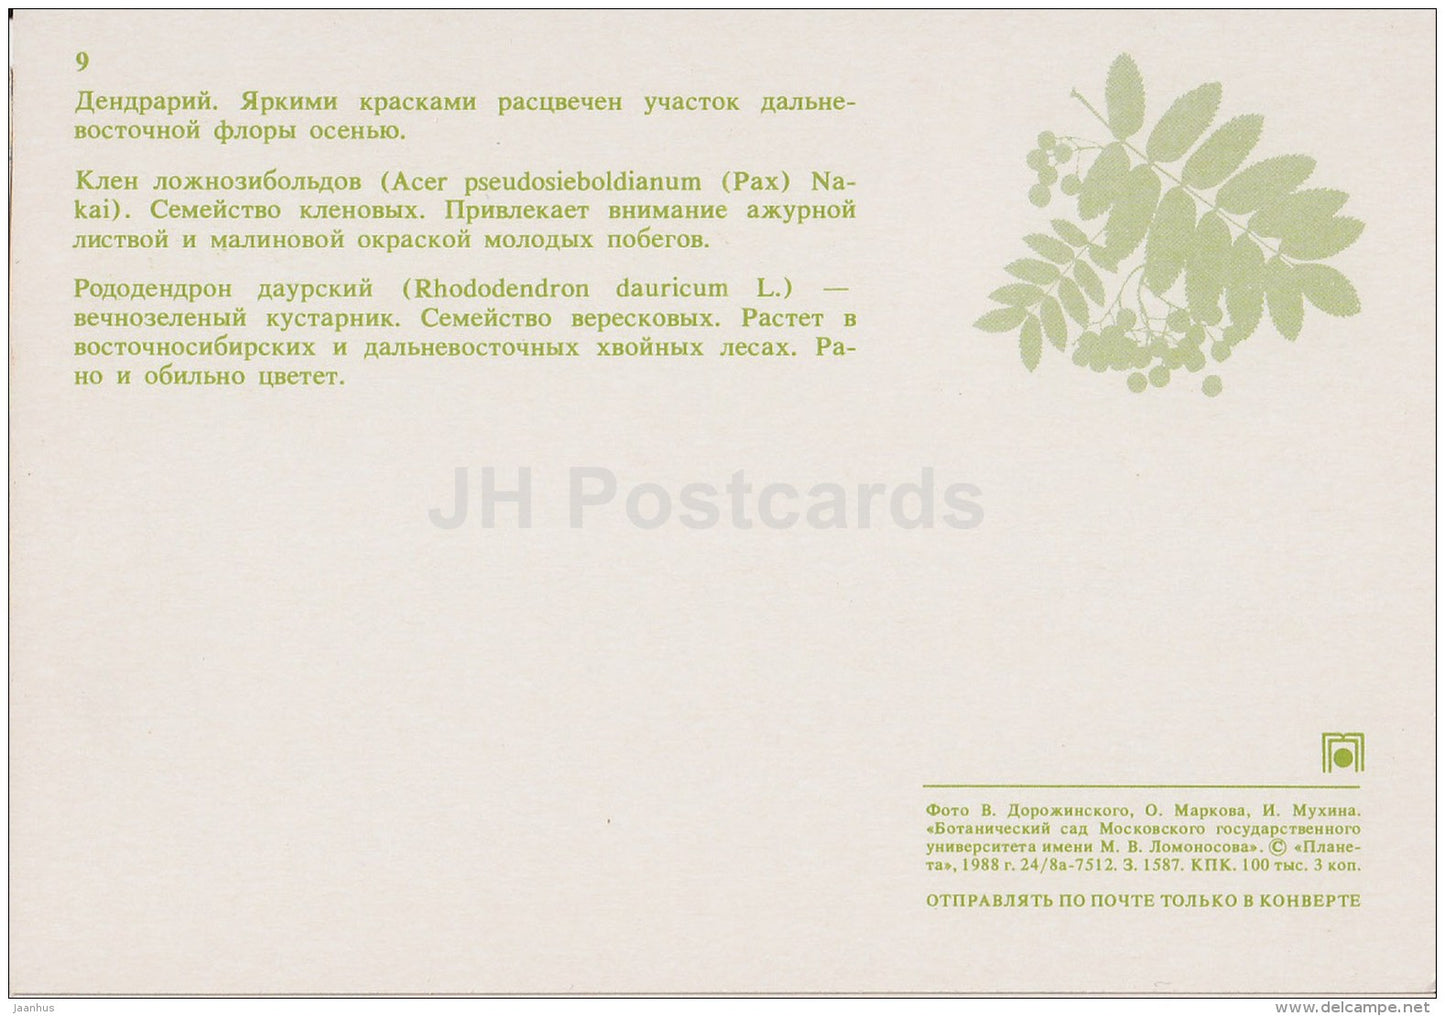 Korean maple , Acer pseudosieboldianum - Rhododendron dauricum - Moscow Botanical Garden - 1988 - Russia USSR - unused - JH Postcards